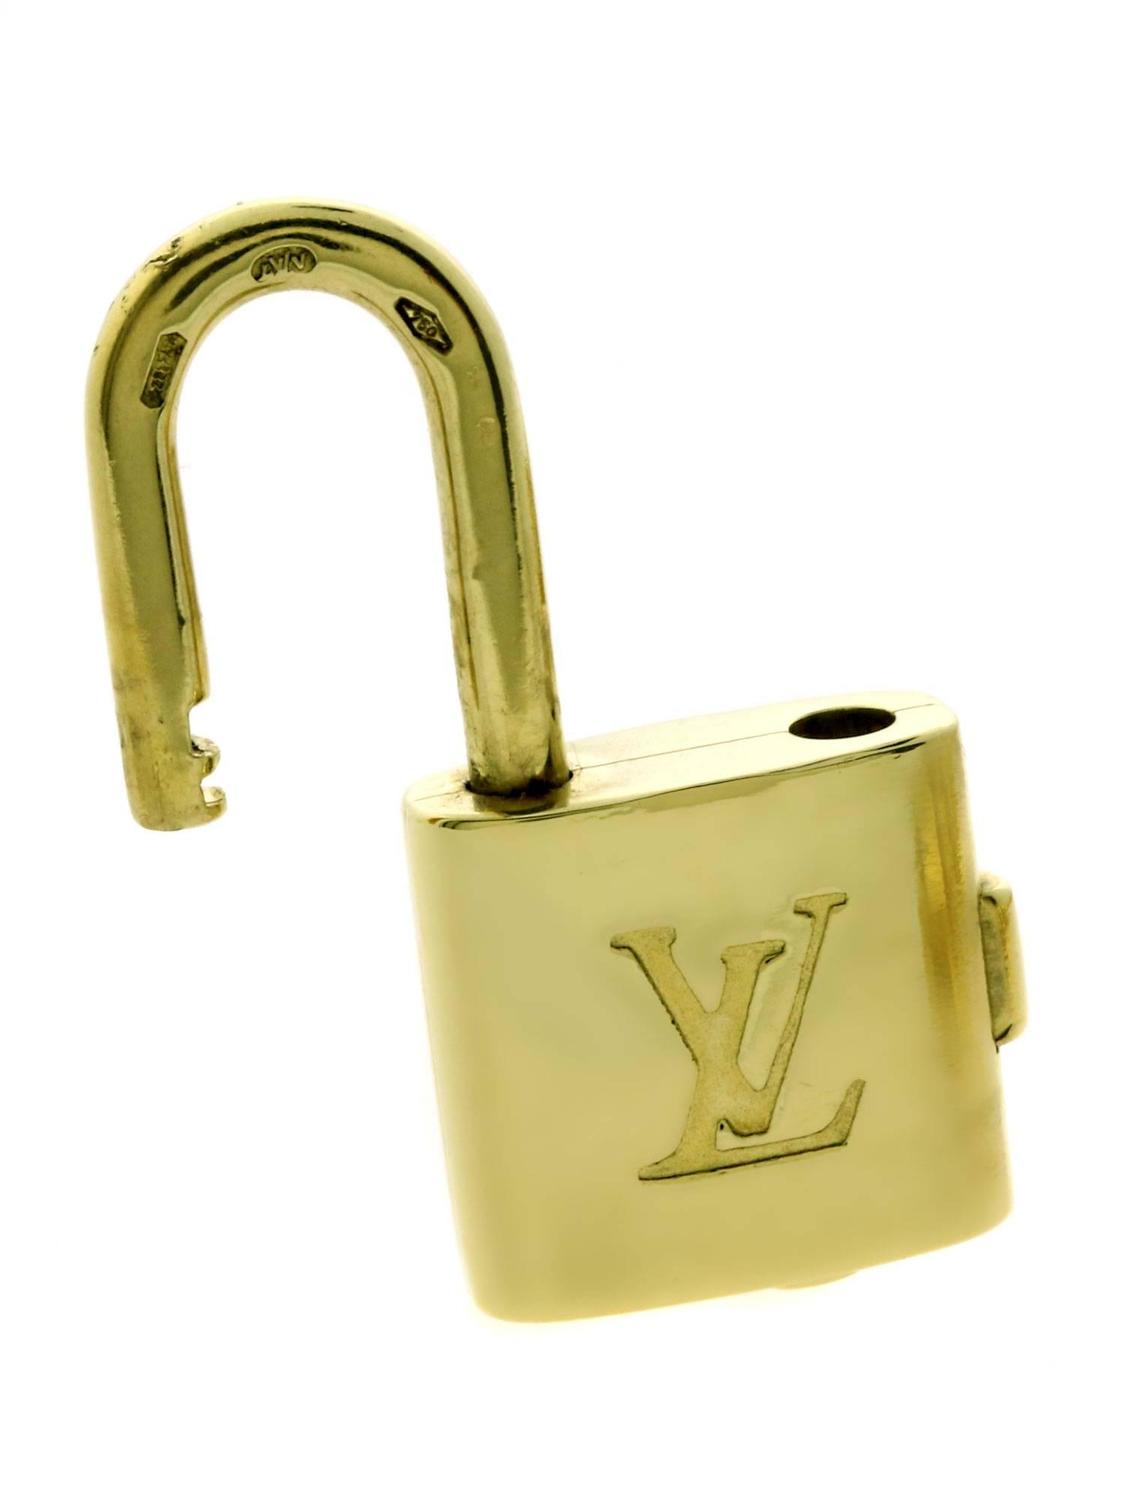 Louis Vuitton Padlock Charm Gold Bracelet For Sale at 1stdibs